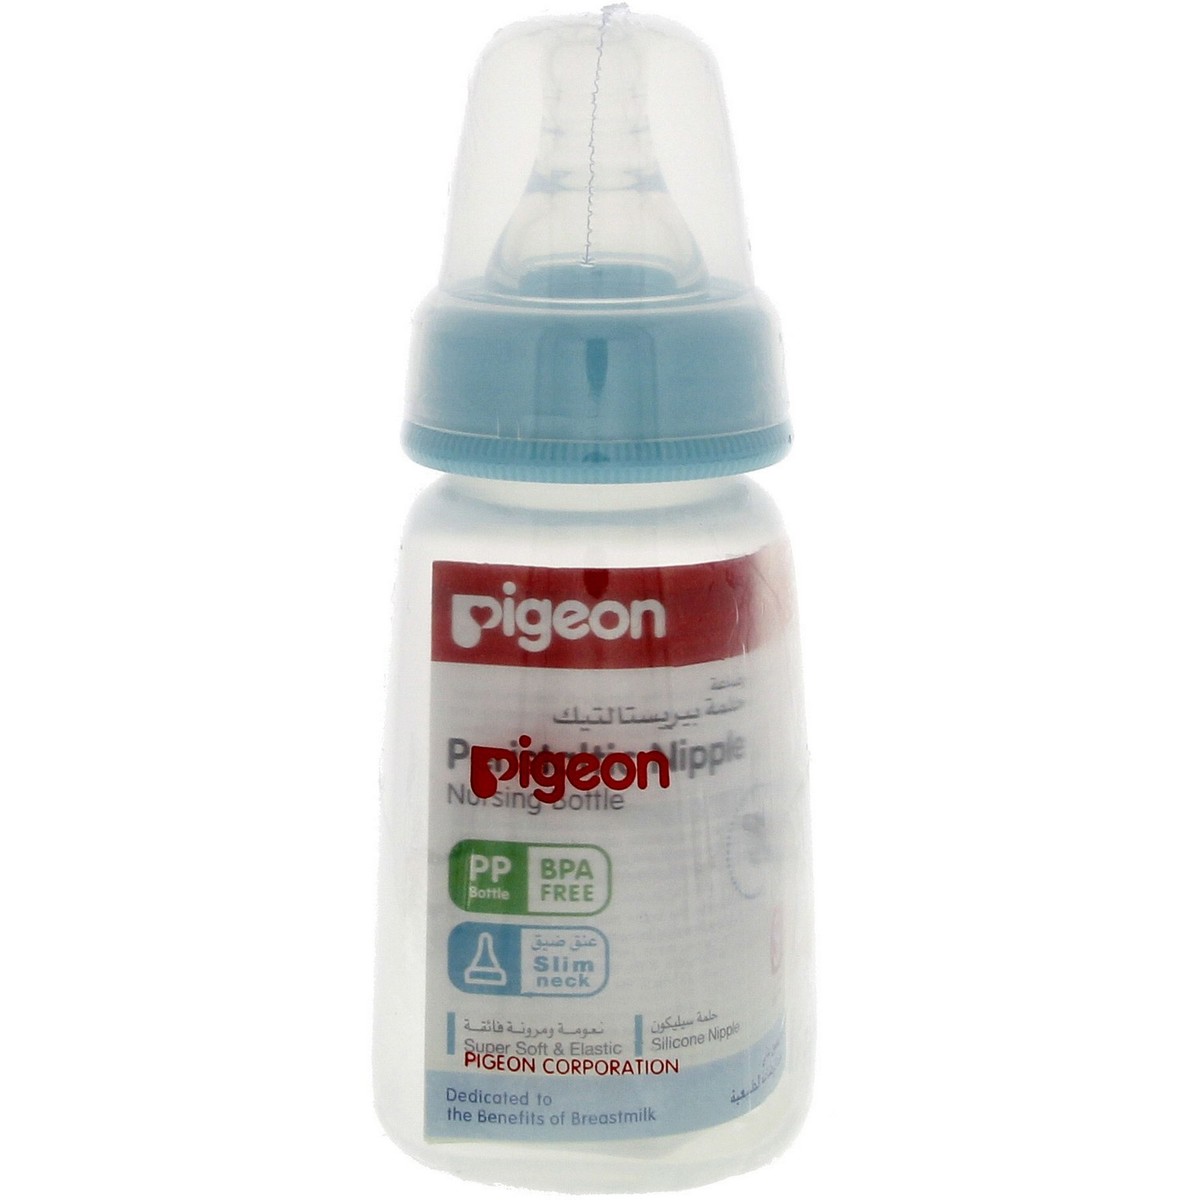 Pigeon Peristaltic Nipple Nursing Bottle 120ml Assorted Color price in  Dubai, UAE Compare Prices